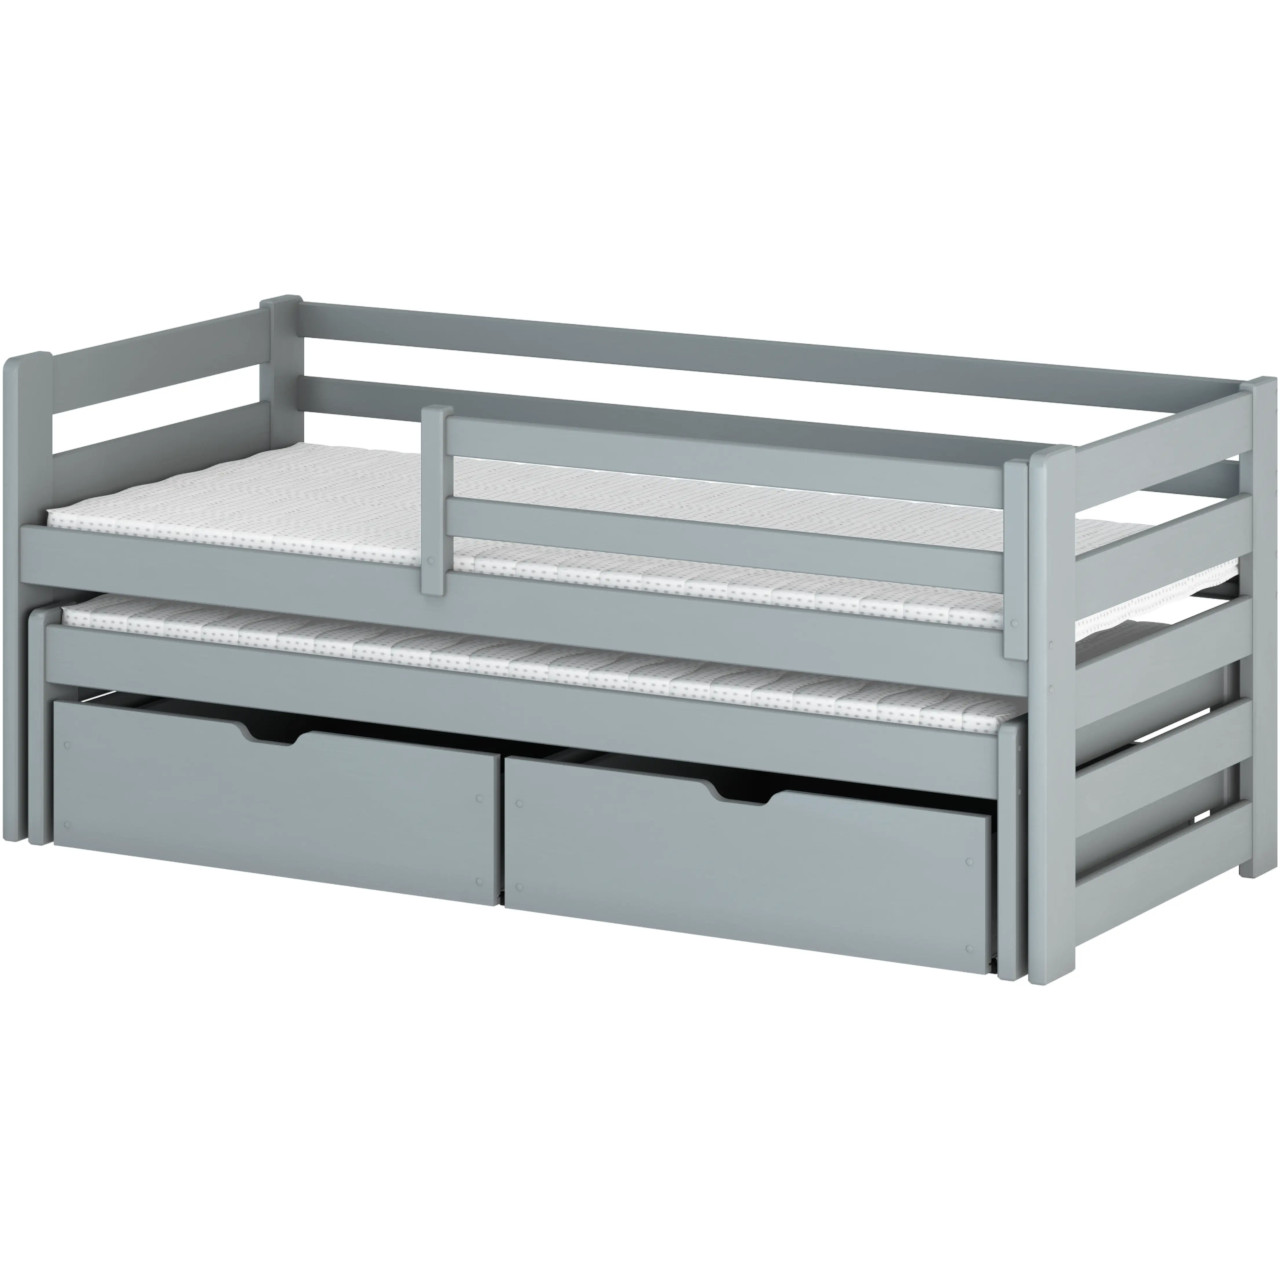 Bunk bed 90x190 LISA ash grey